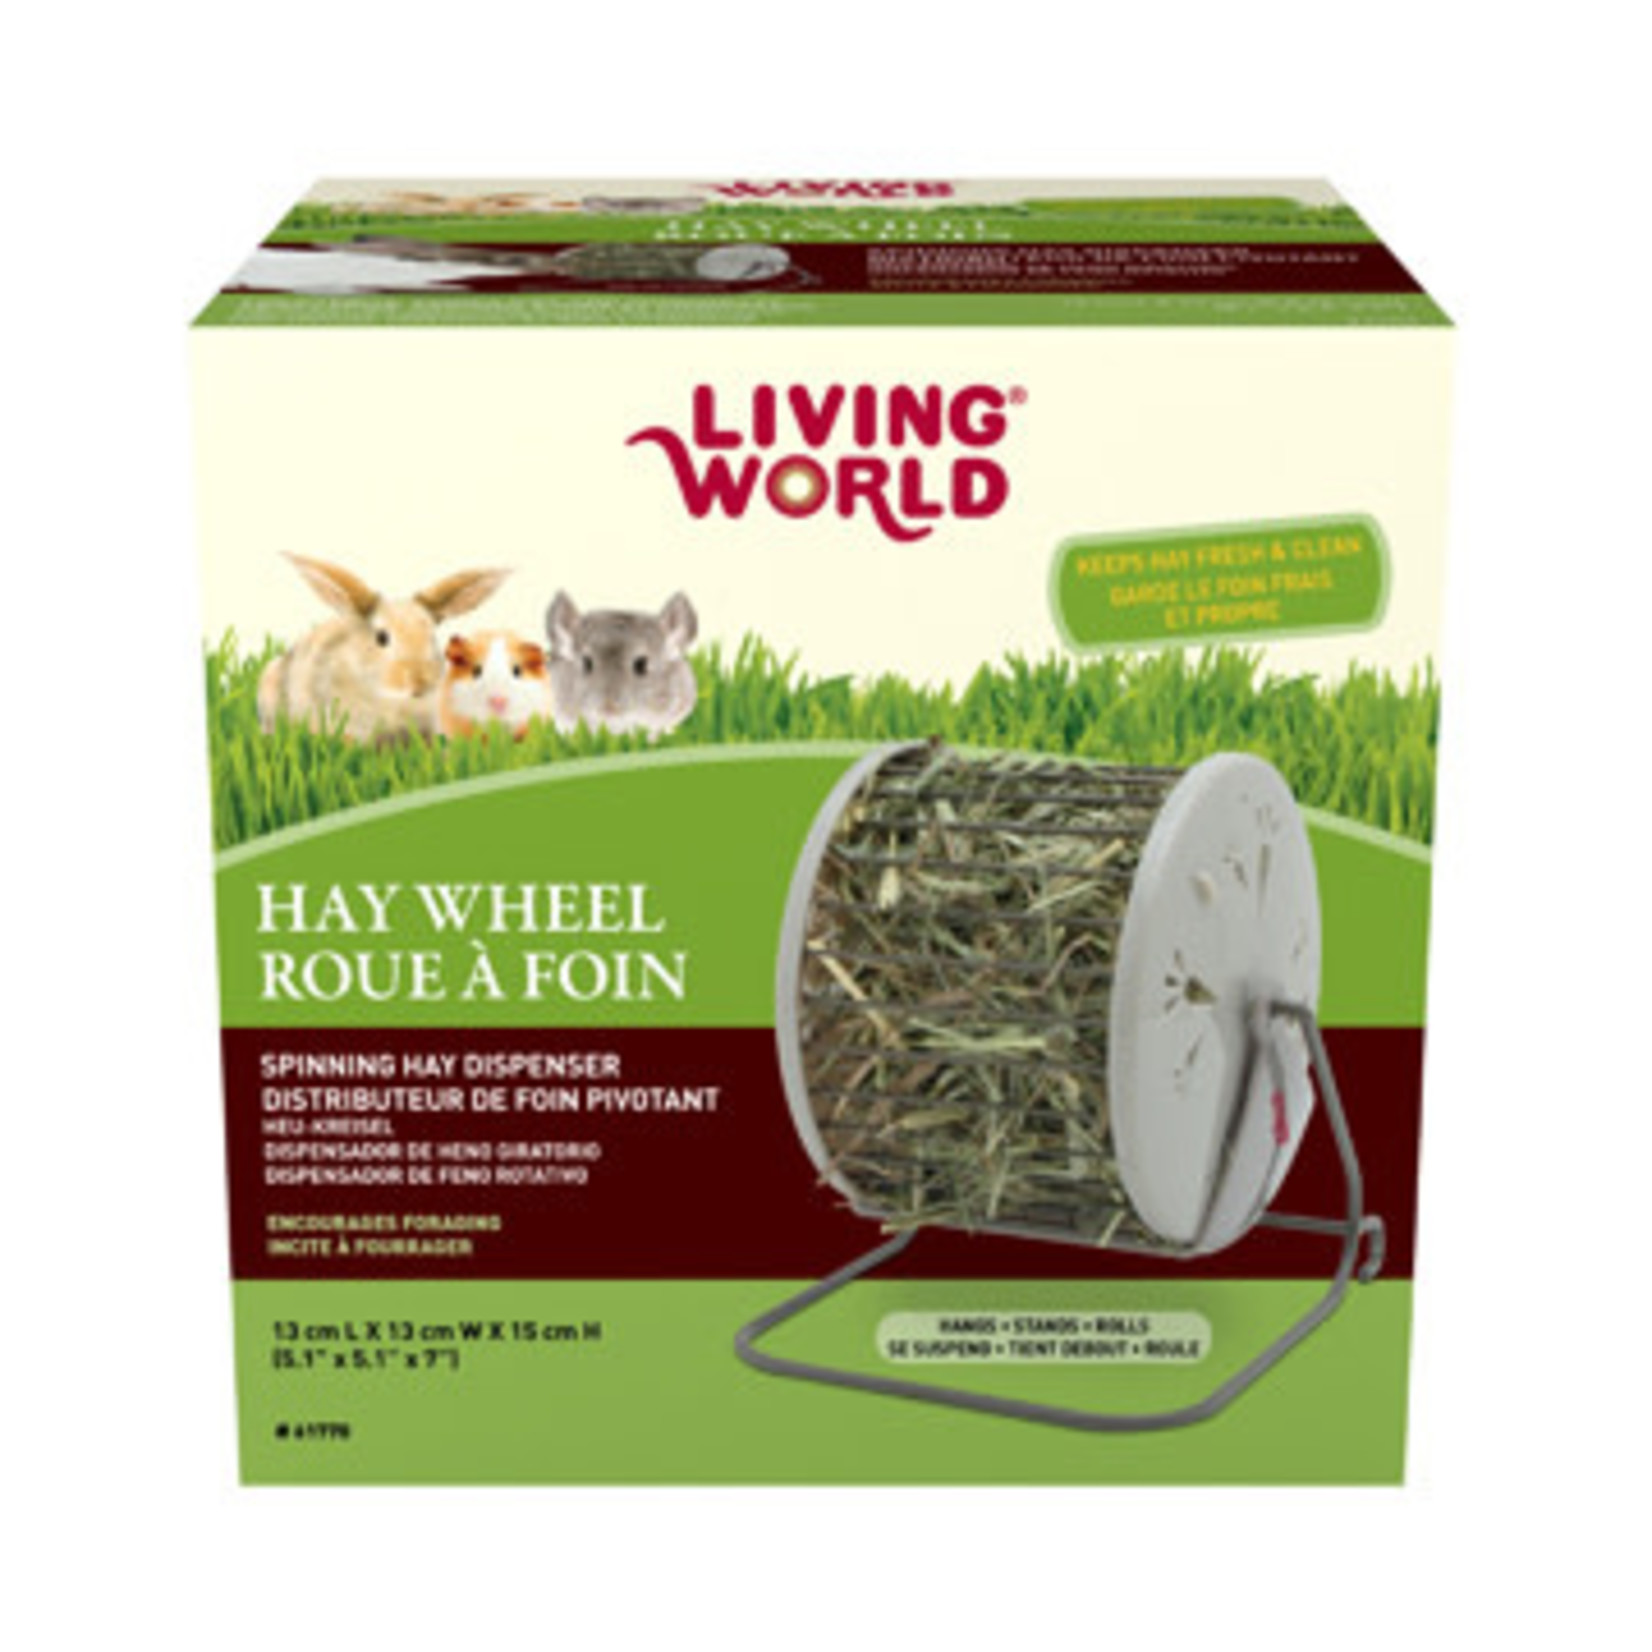 LIVING WORLD Living World Hay - Wheel - 13 cm L X 13 cm W X 15 cm H (5.1in x 5.1in x 7in)